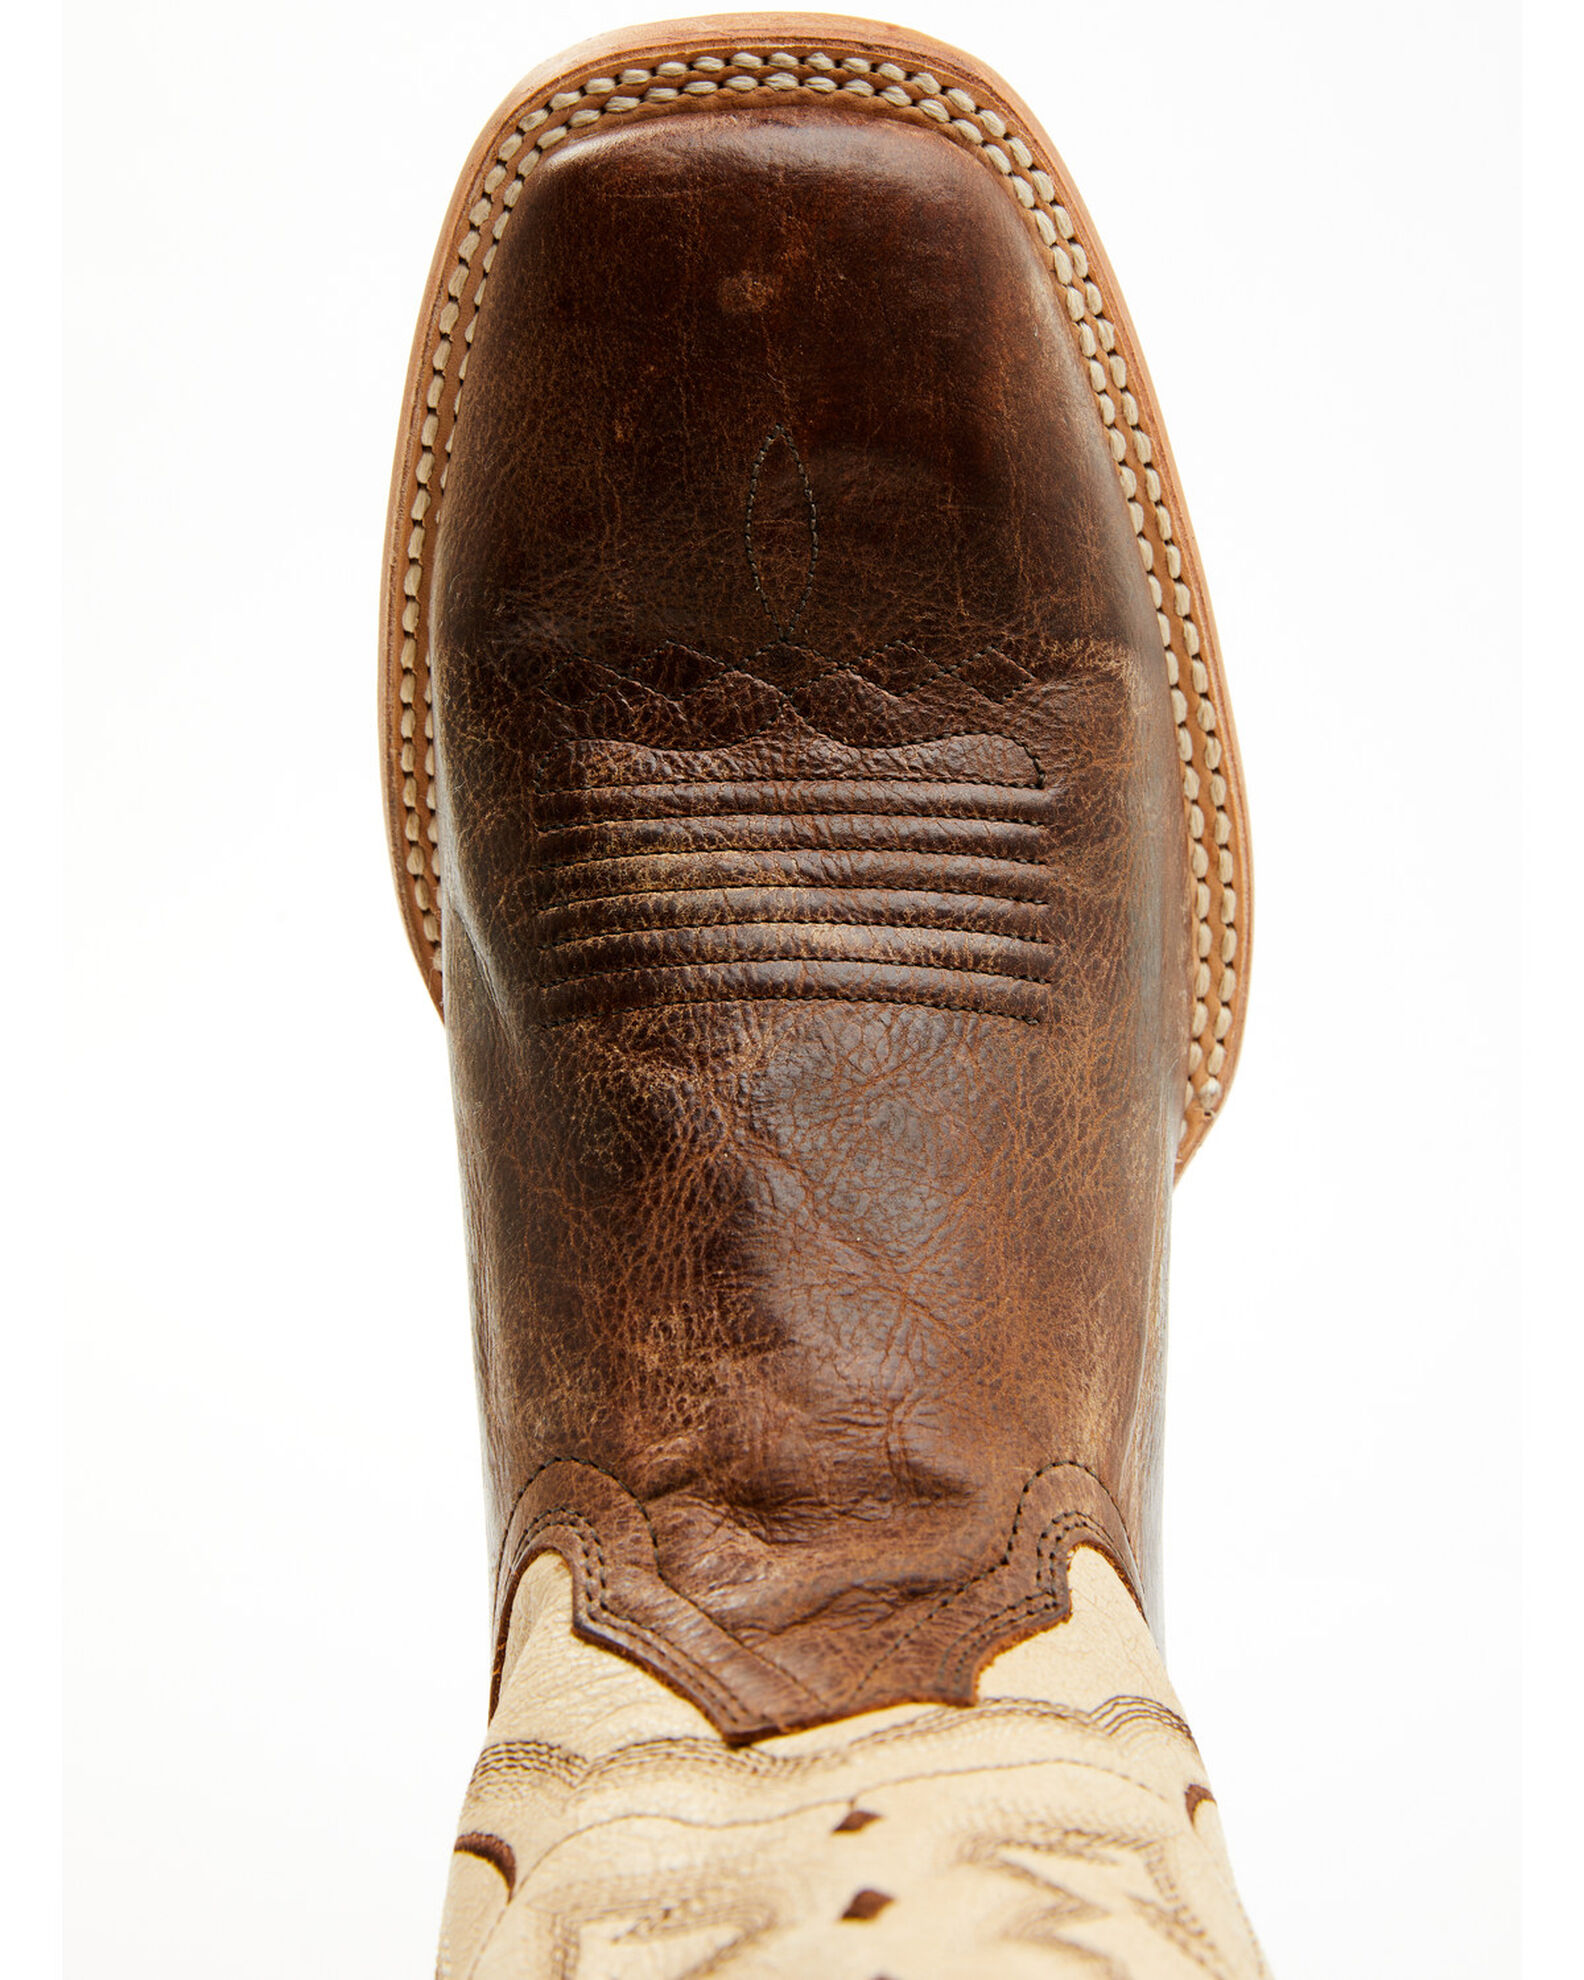 Cody James Men's Bone Python Exotic Western Boot - Broad Square Toe